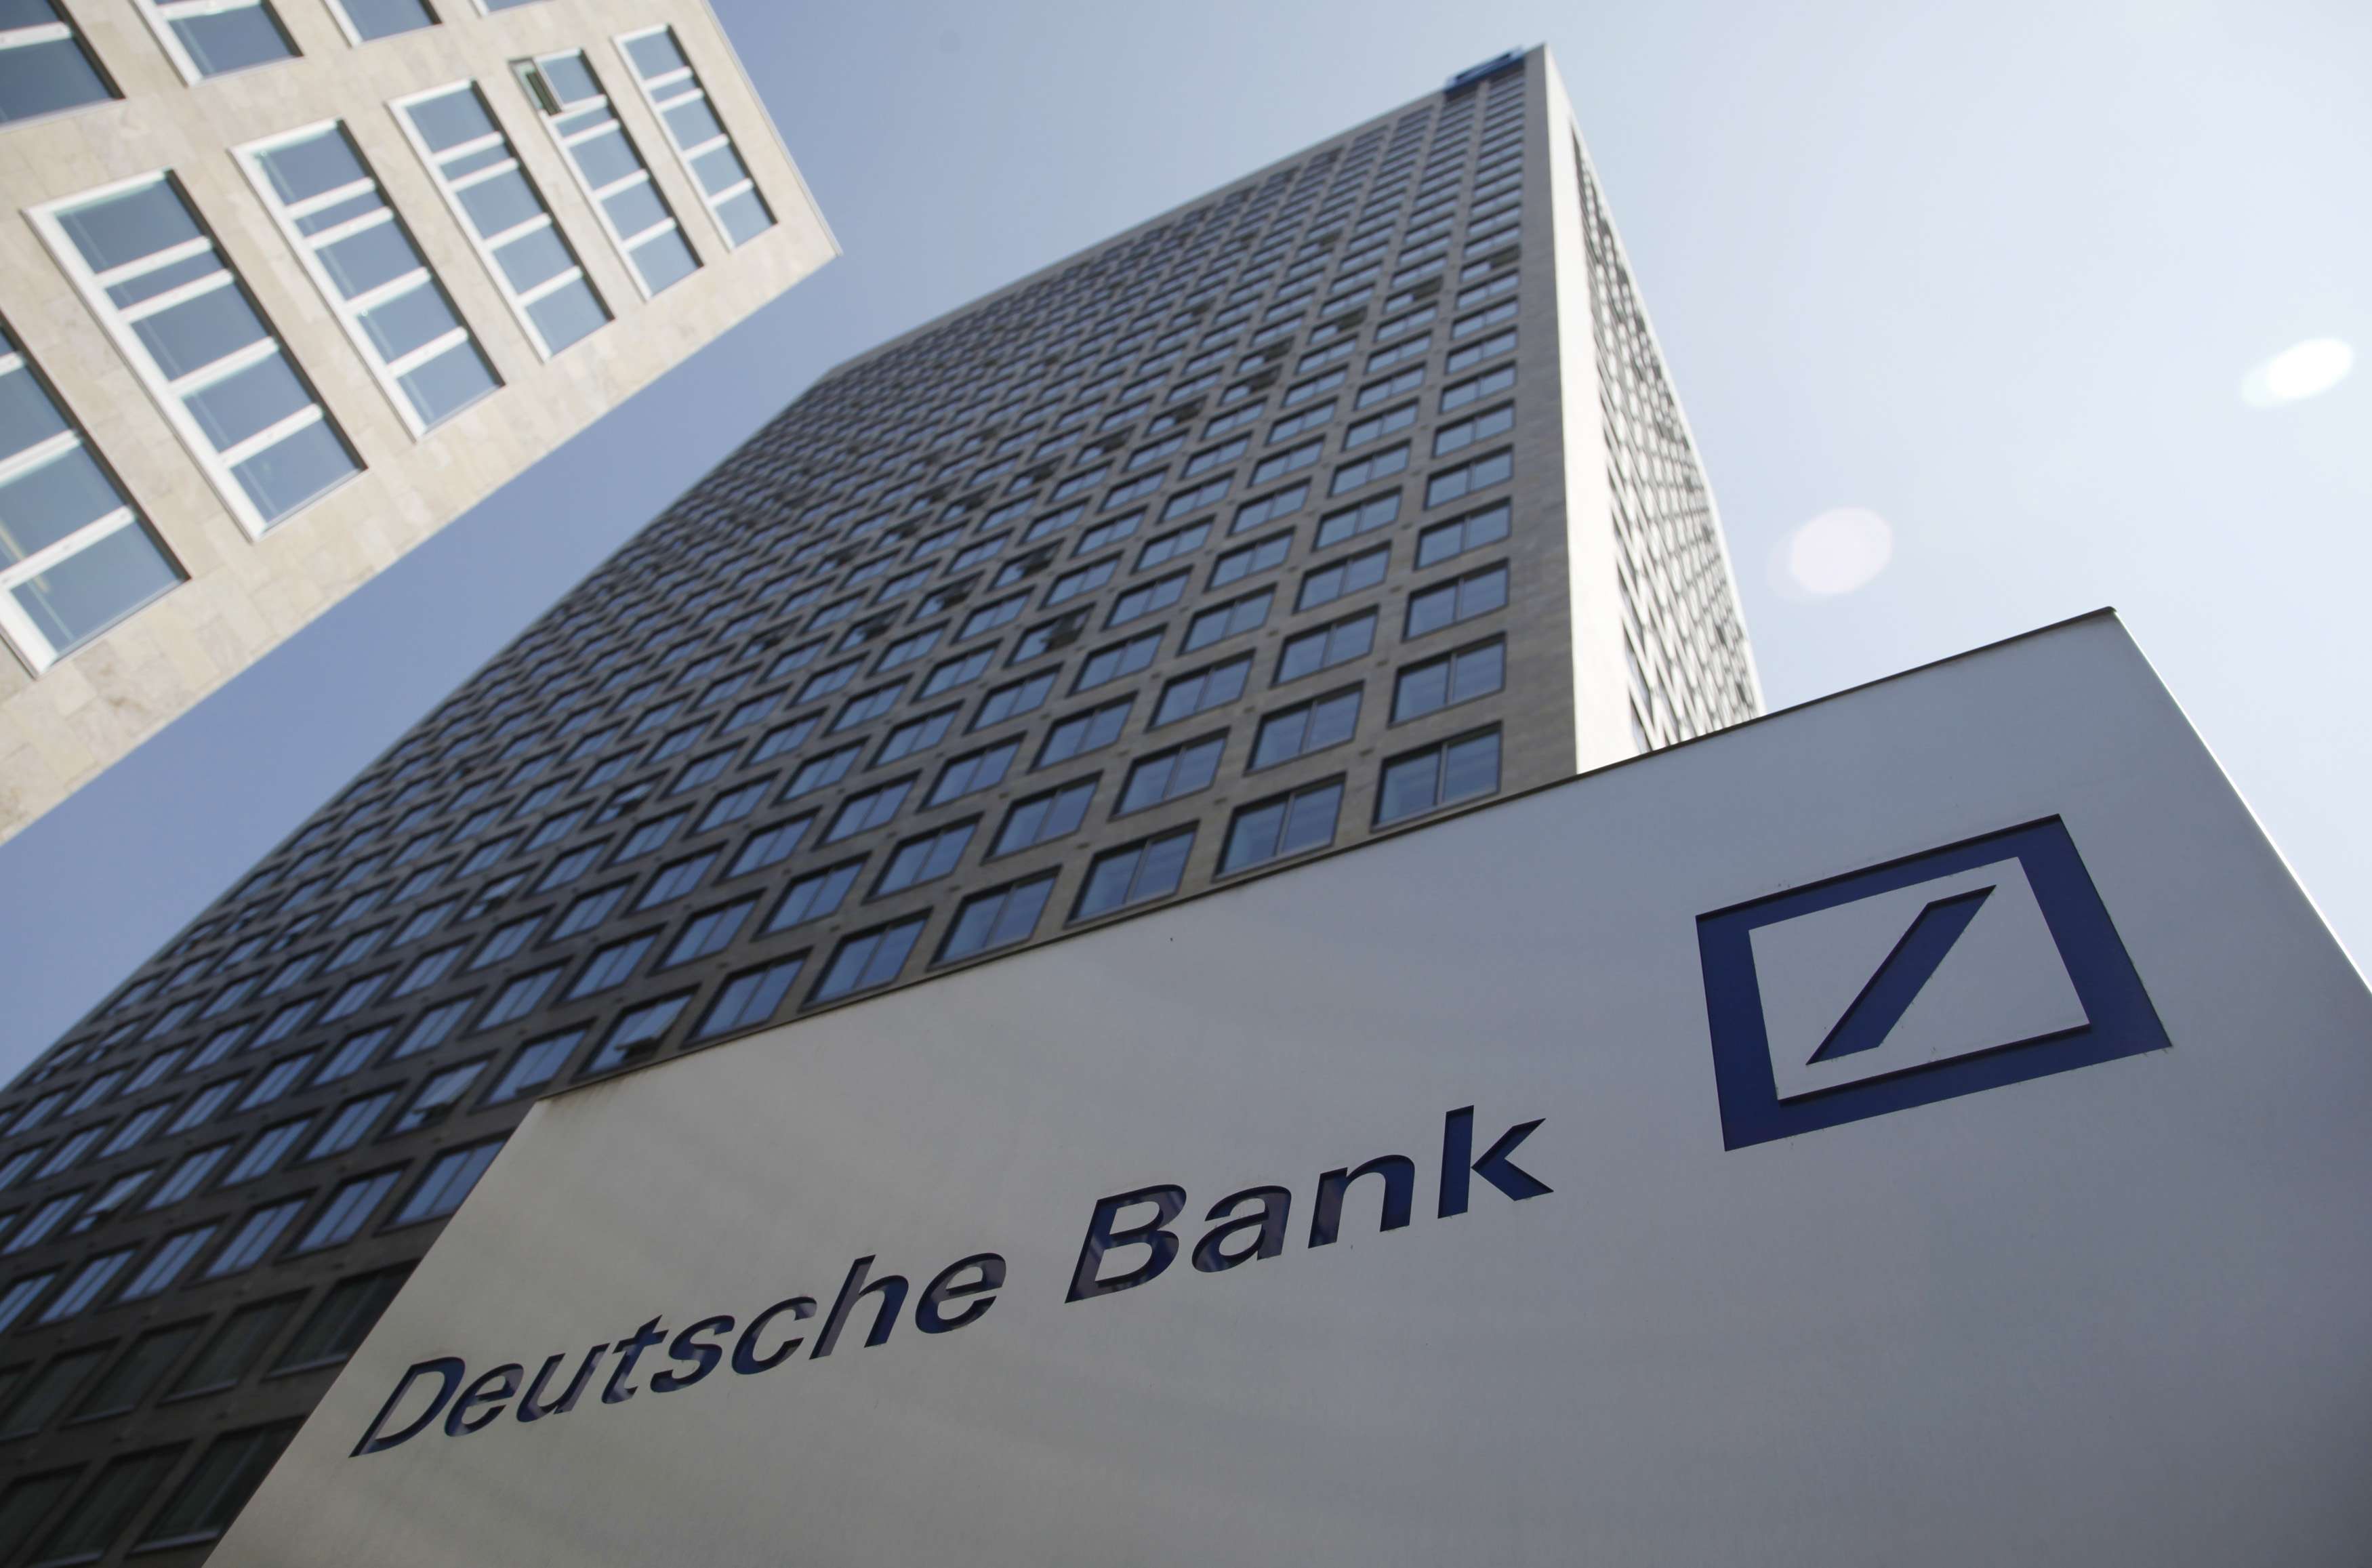 Der bank. Deutsche Bank банки Германии. Swift 940 Deutsche Bank AG. Здание Deutsche Bank 2020. Deutsche Bank в России.